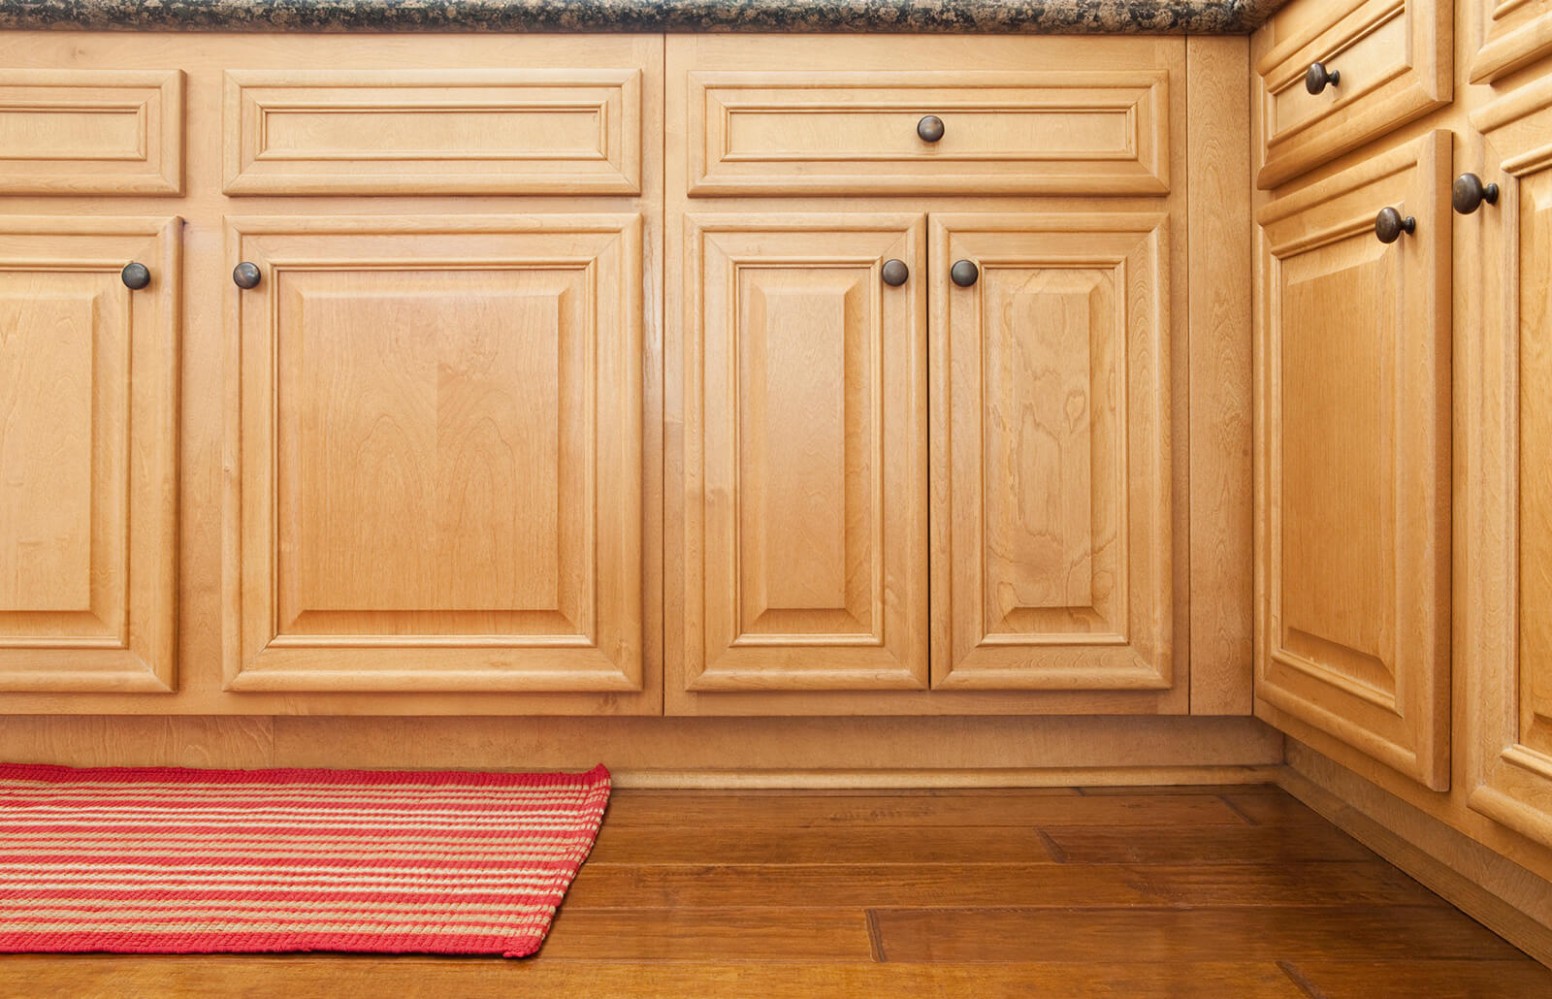 8 Proven Ways to Clean Sticky Wood Kitchen Cabinets  LoveToKnow - wood kitchen units